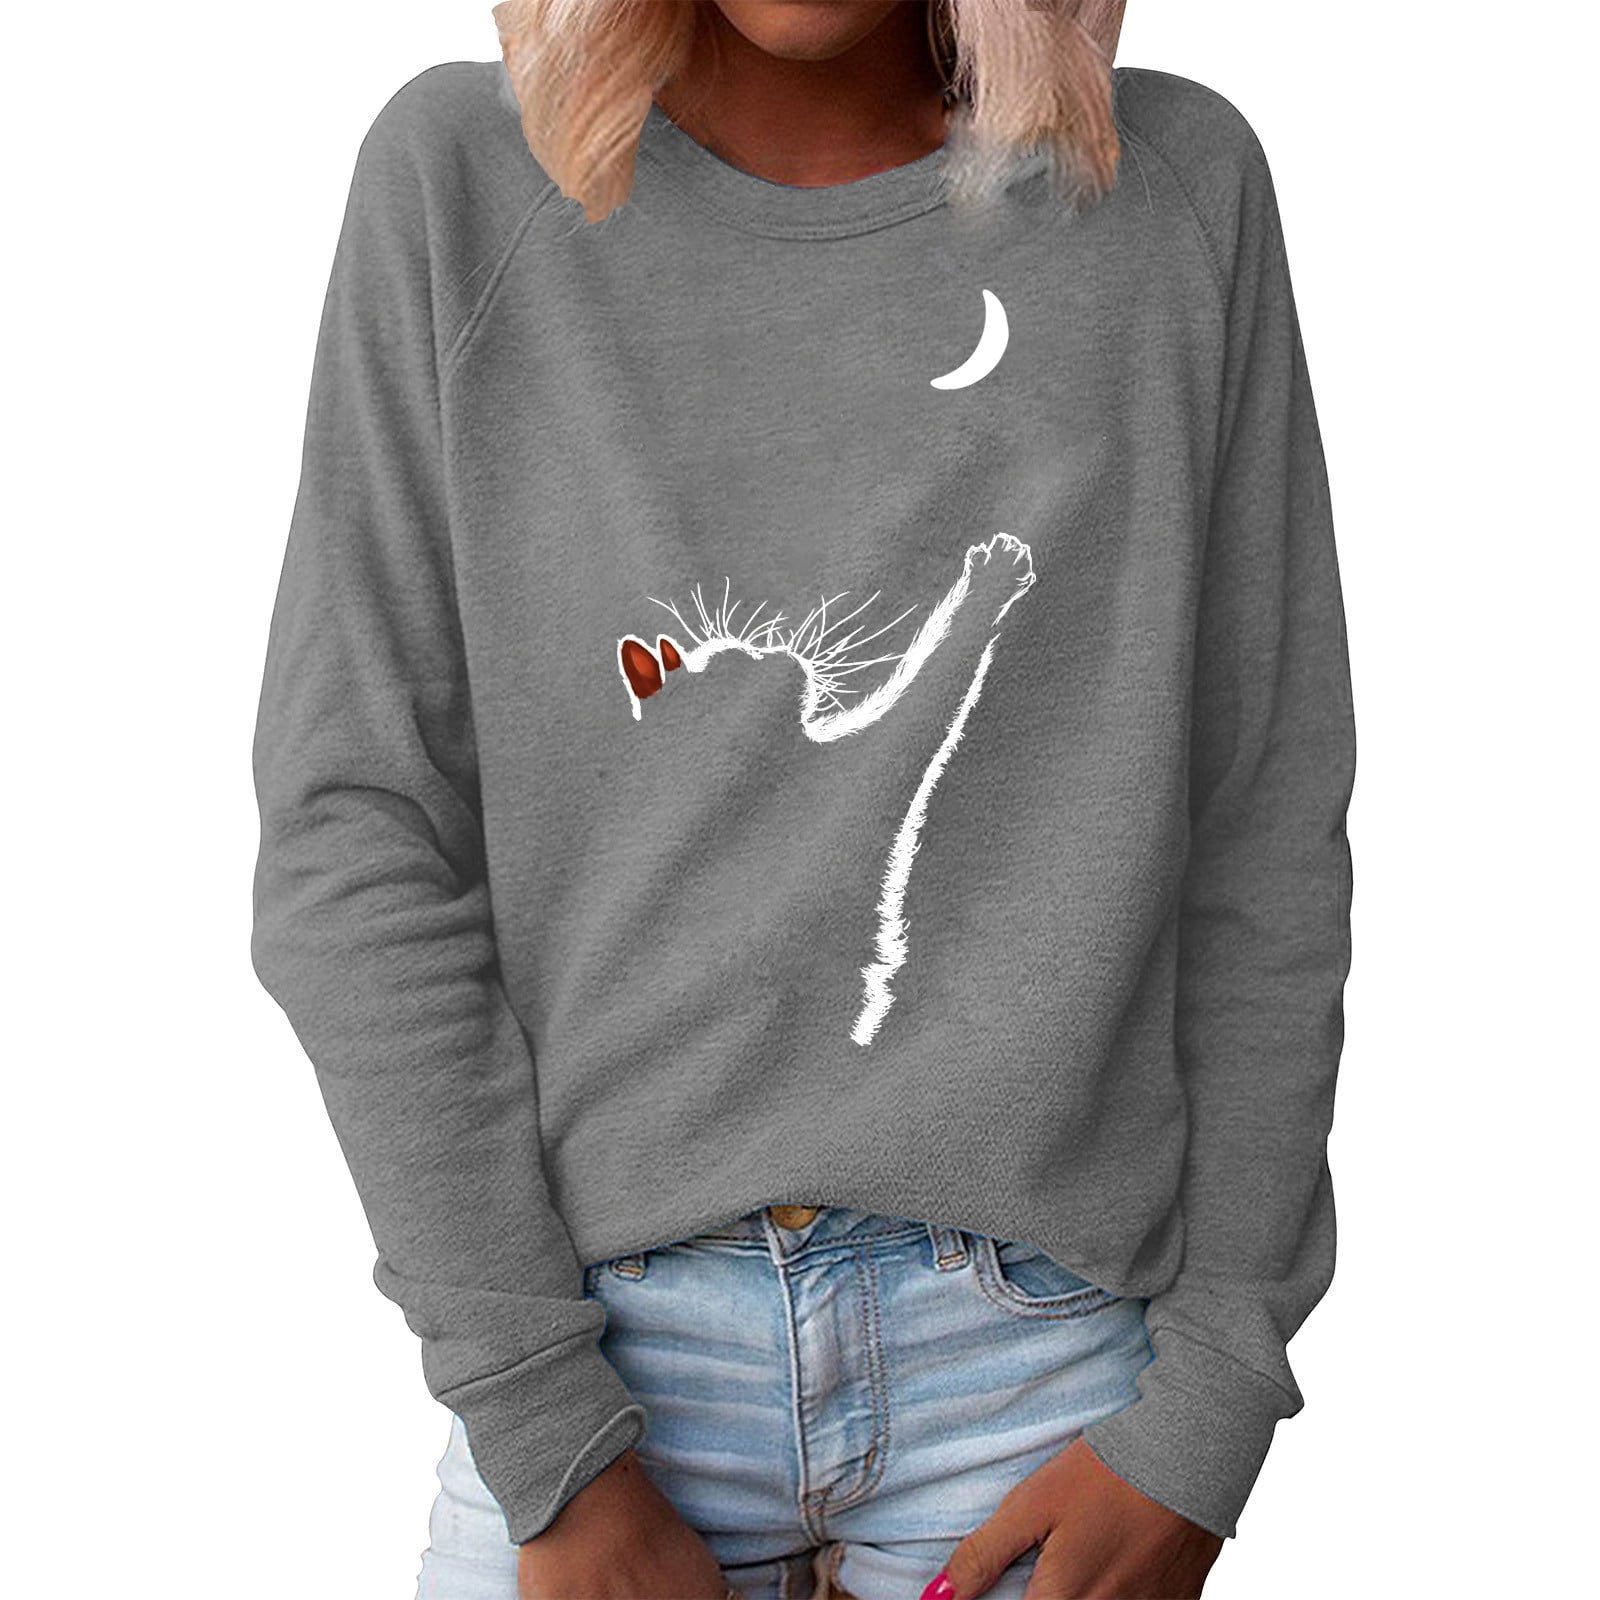 Women Casual Cat Print Long Sleeve O-Neck Sweatshirt Pullover Tops Blouse